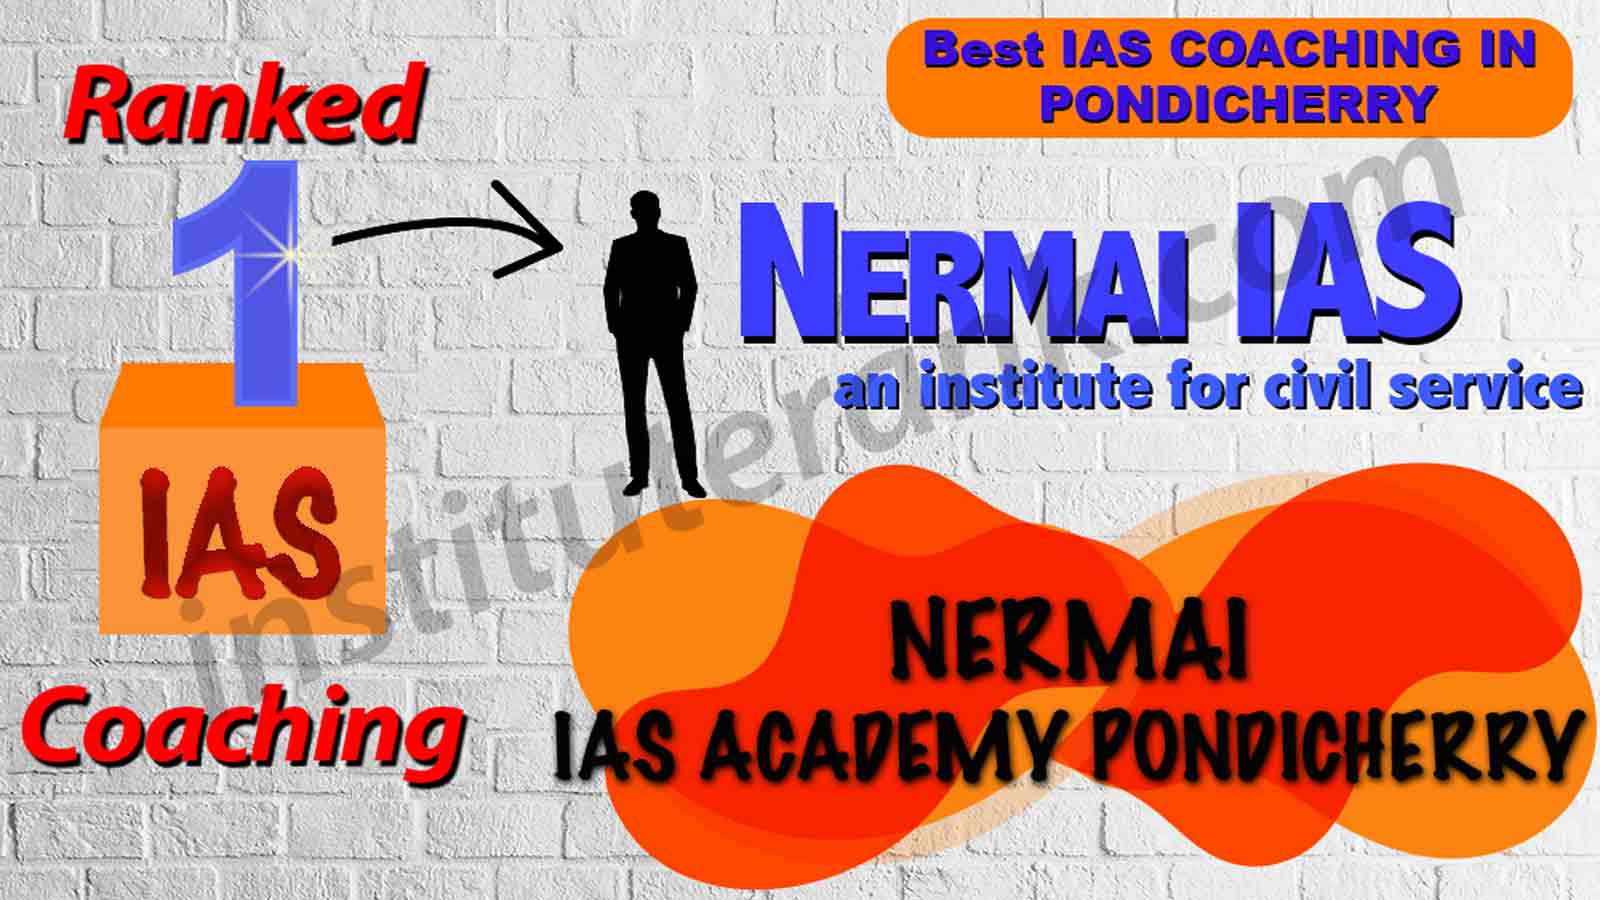 Best IAS Coaching in Pondicherry